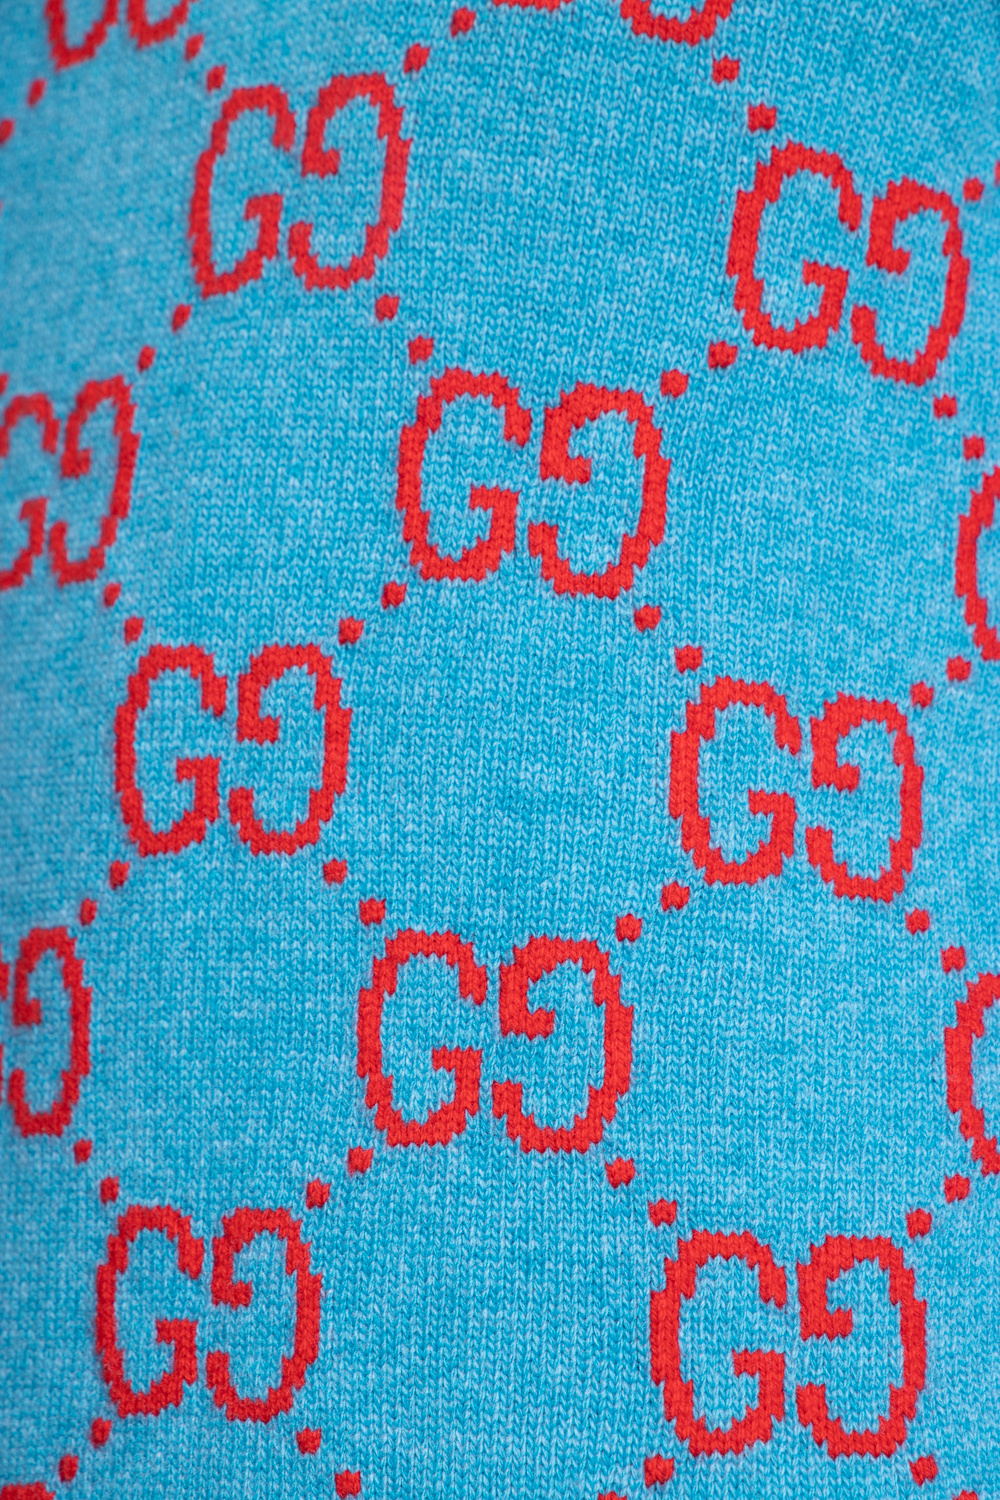 Blue Wool sweater with monogram Gucci - Vitkac TW